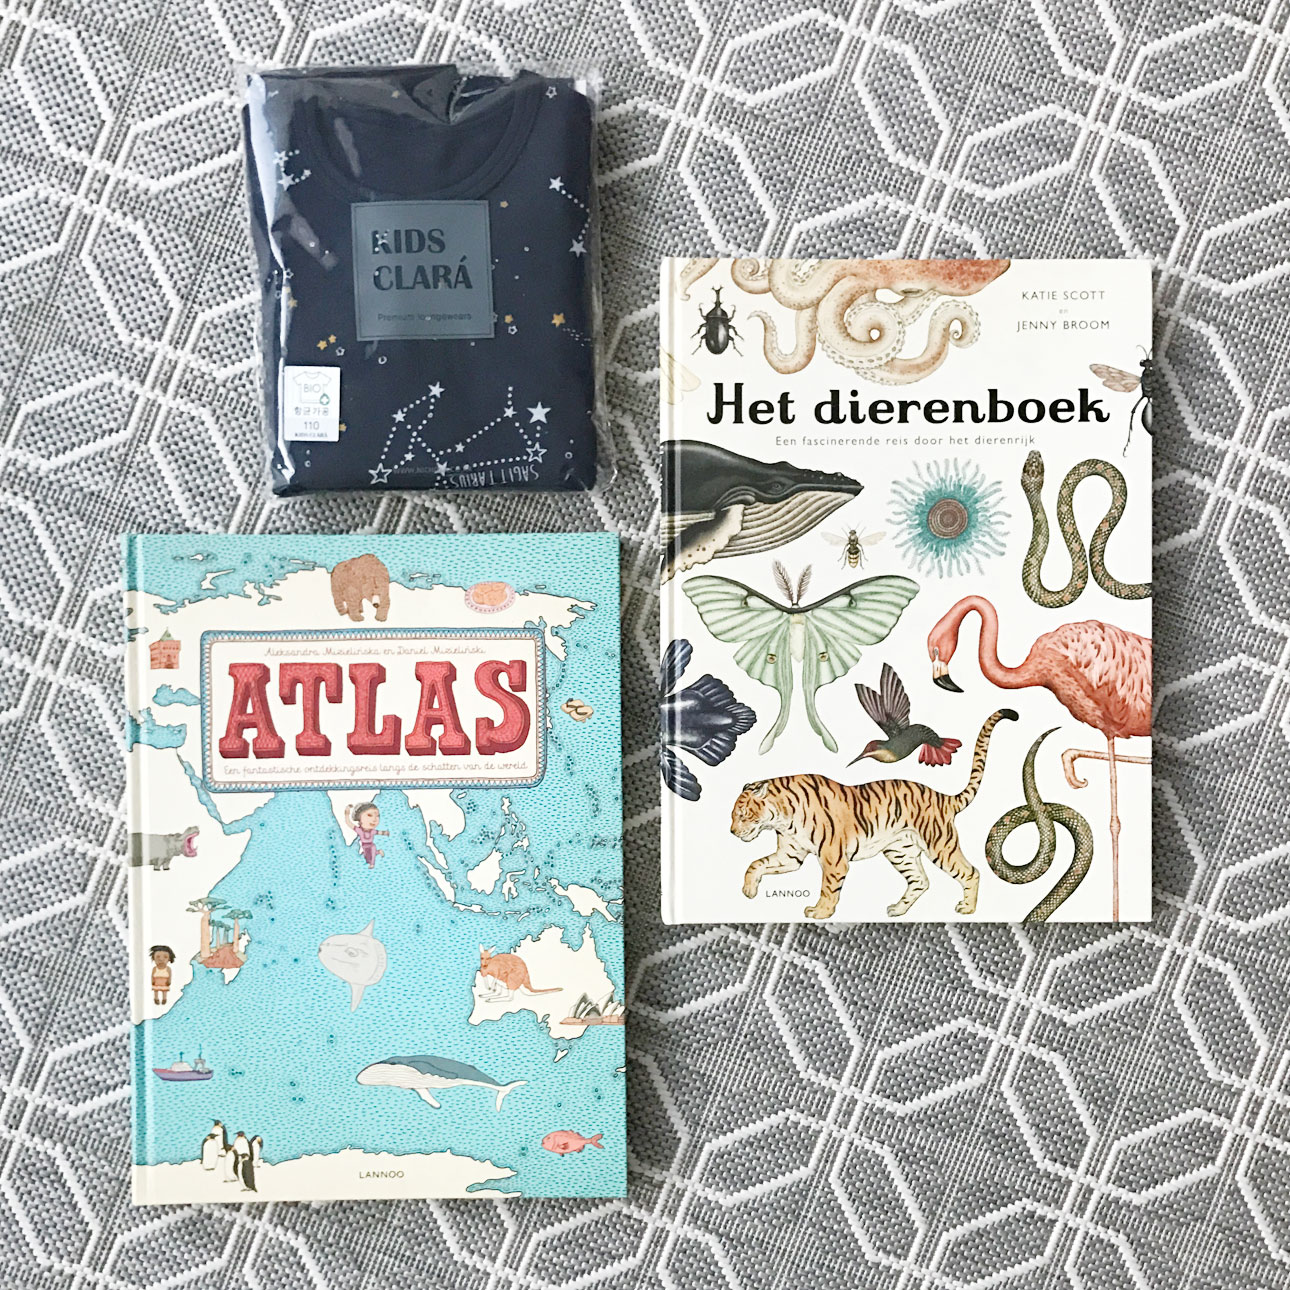 pluk and paloma bestelling prentenboeken pyjama